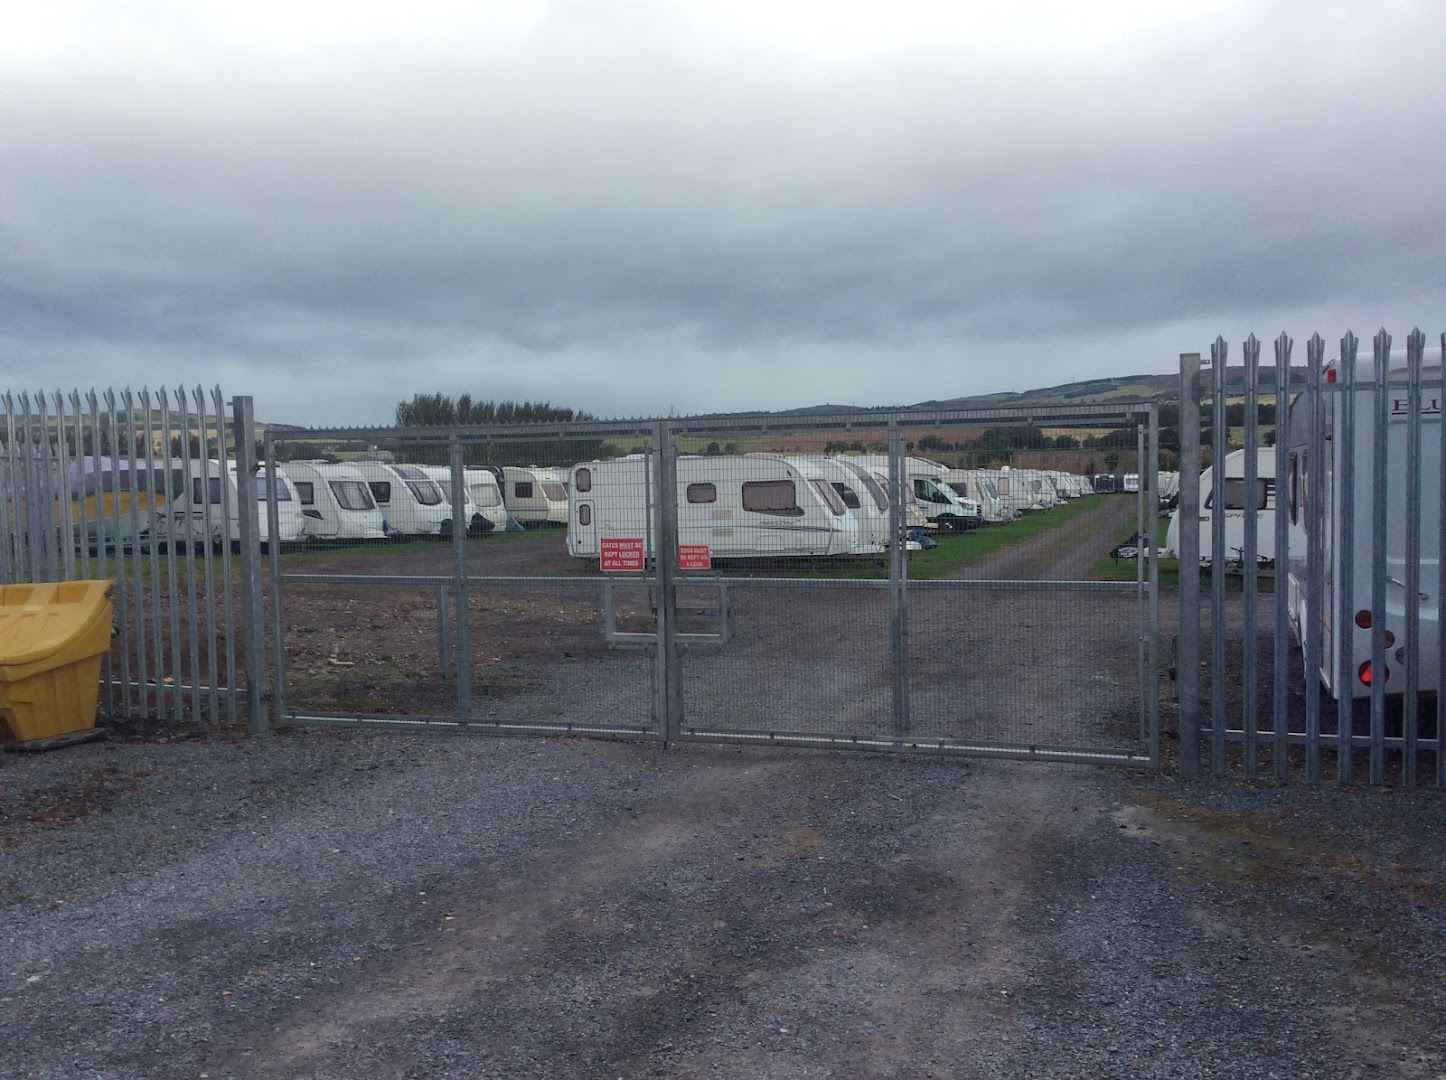 Blairfield Caravan Storage Park